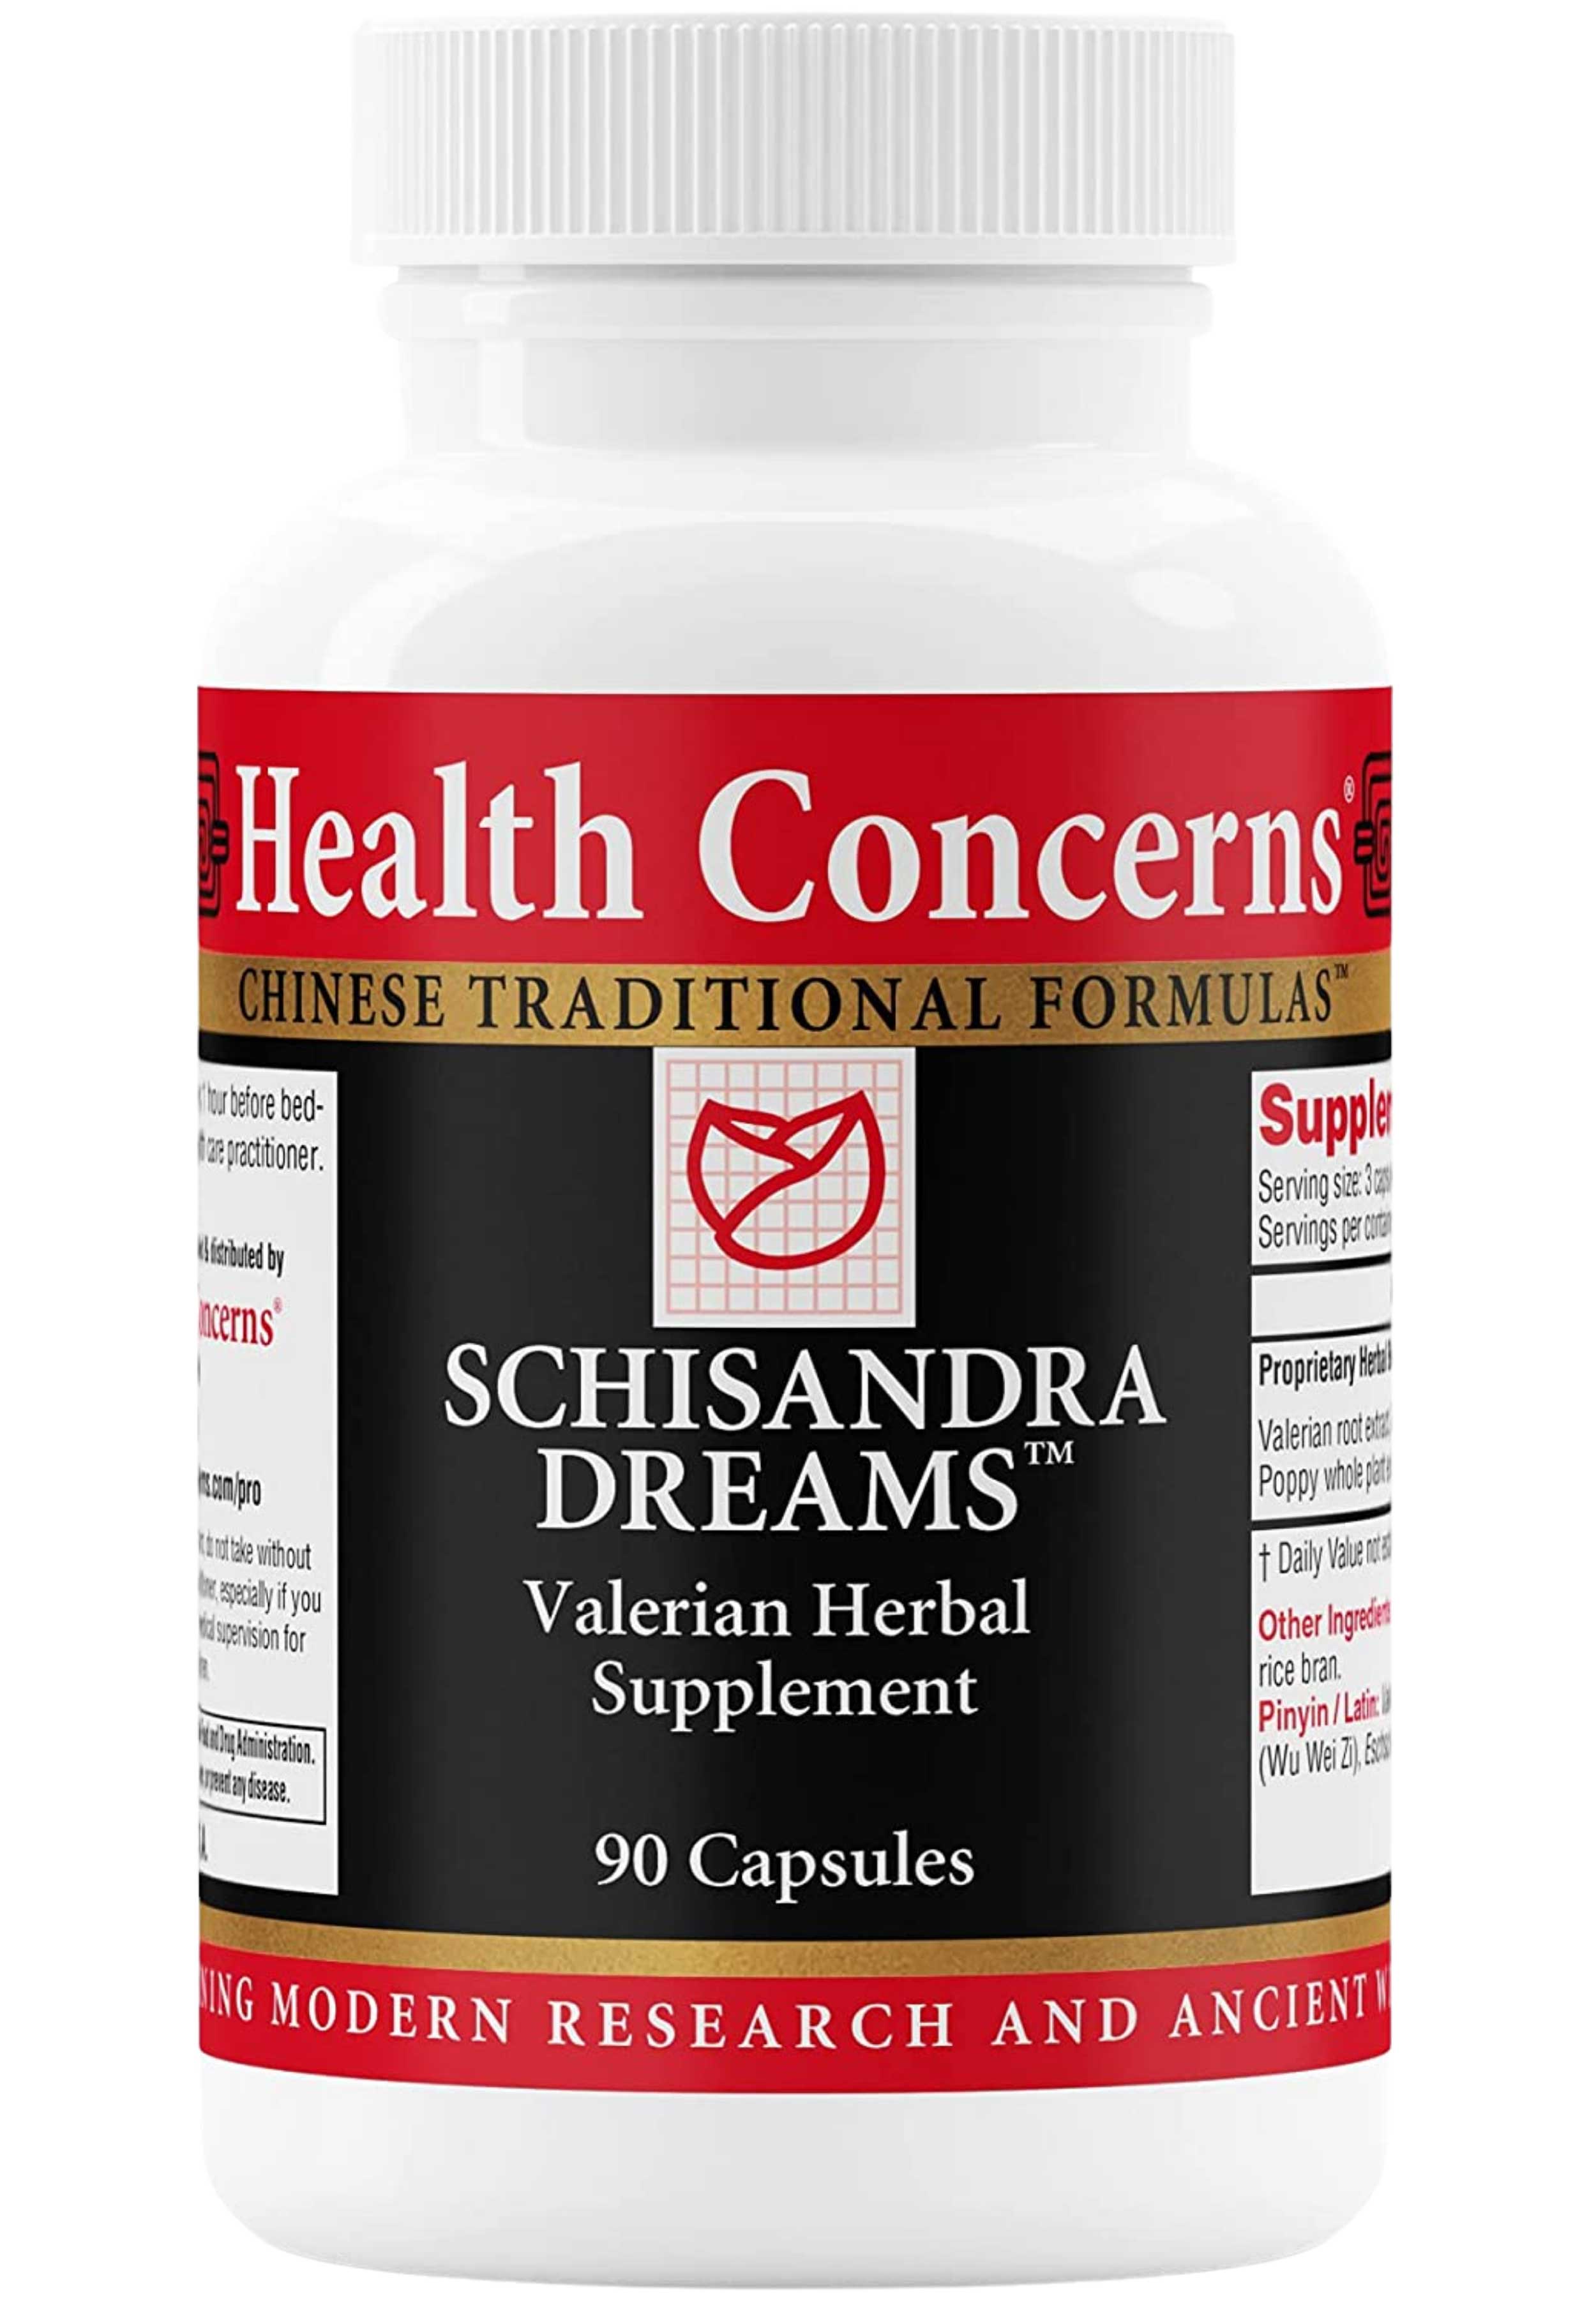 Health Concerns Schisandra Dreams